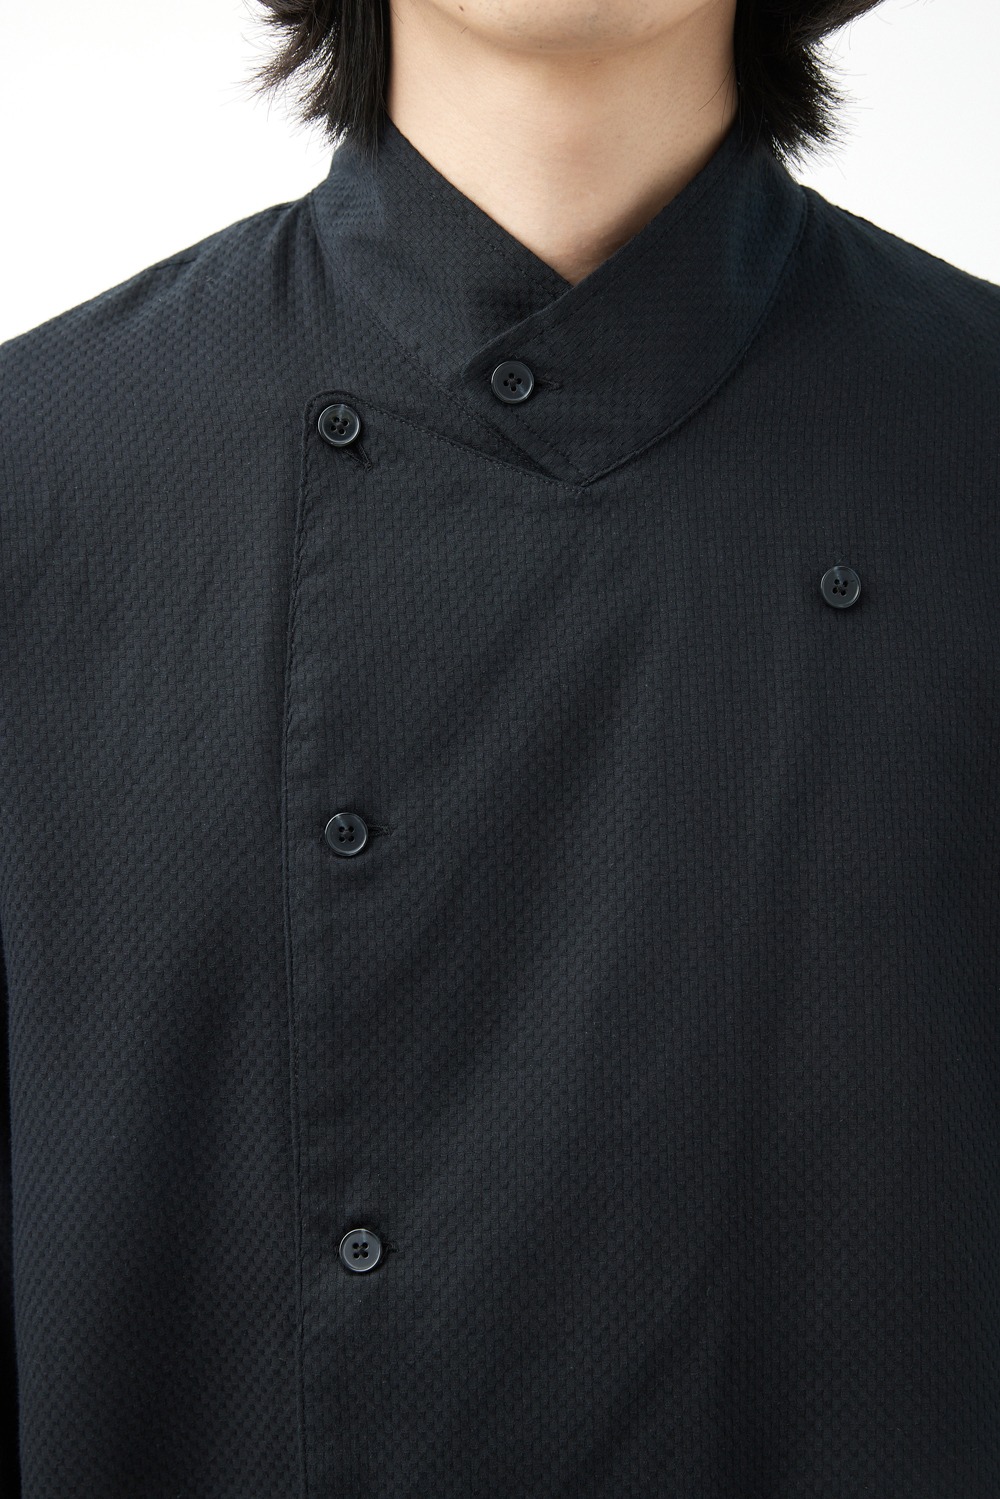 Asymmetric Double Shirt-Jacquard Black